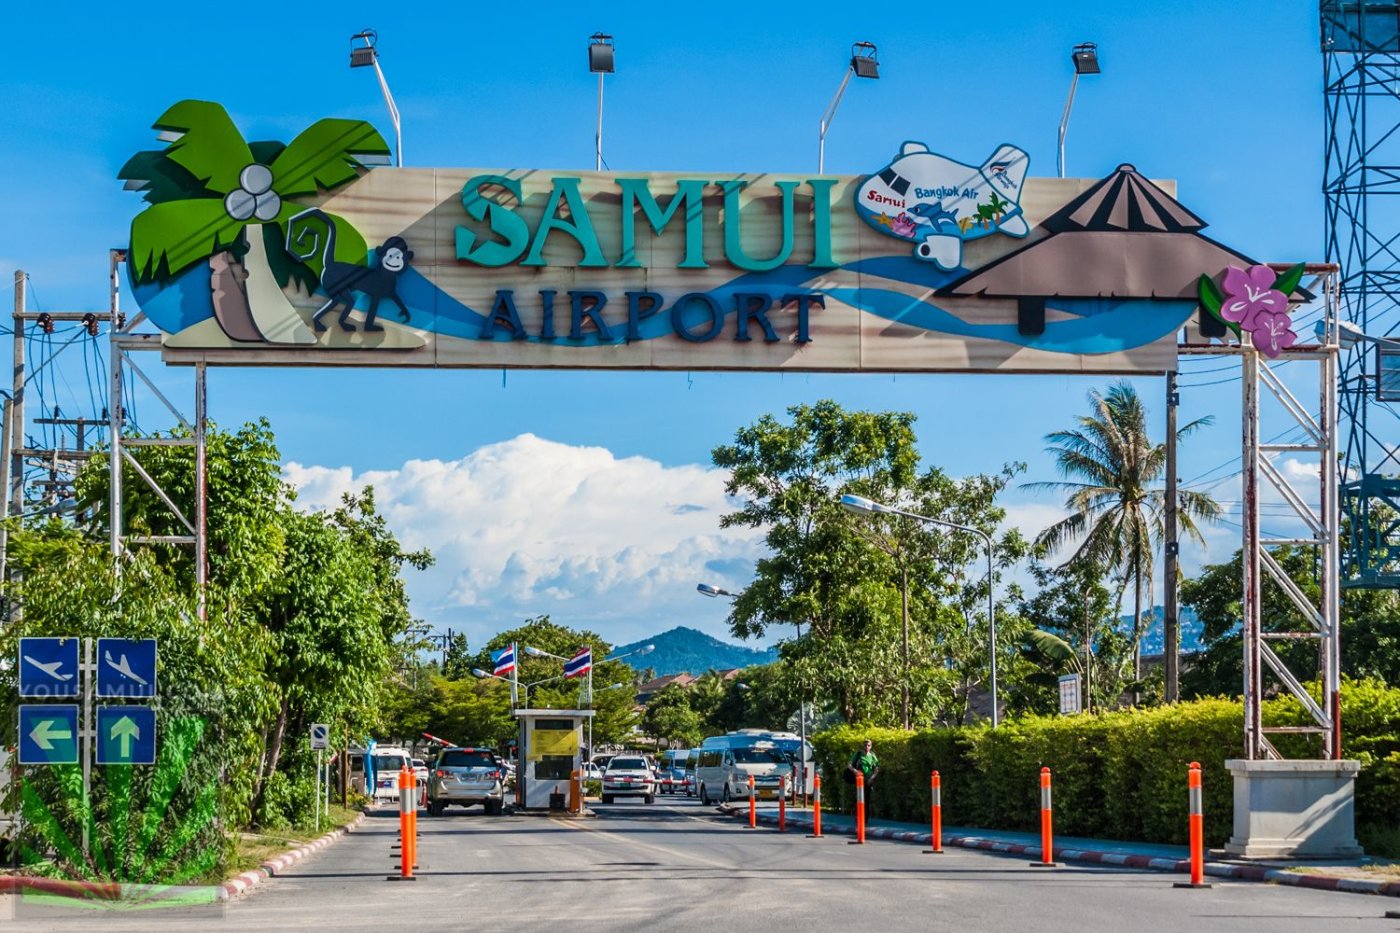 Аэропорт самуи в тайланде (код usm): название, фото, табло. как добраться до аэропорта самуи - 2023